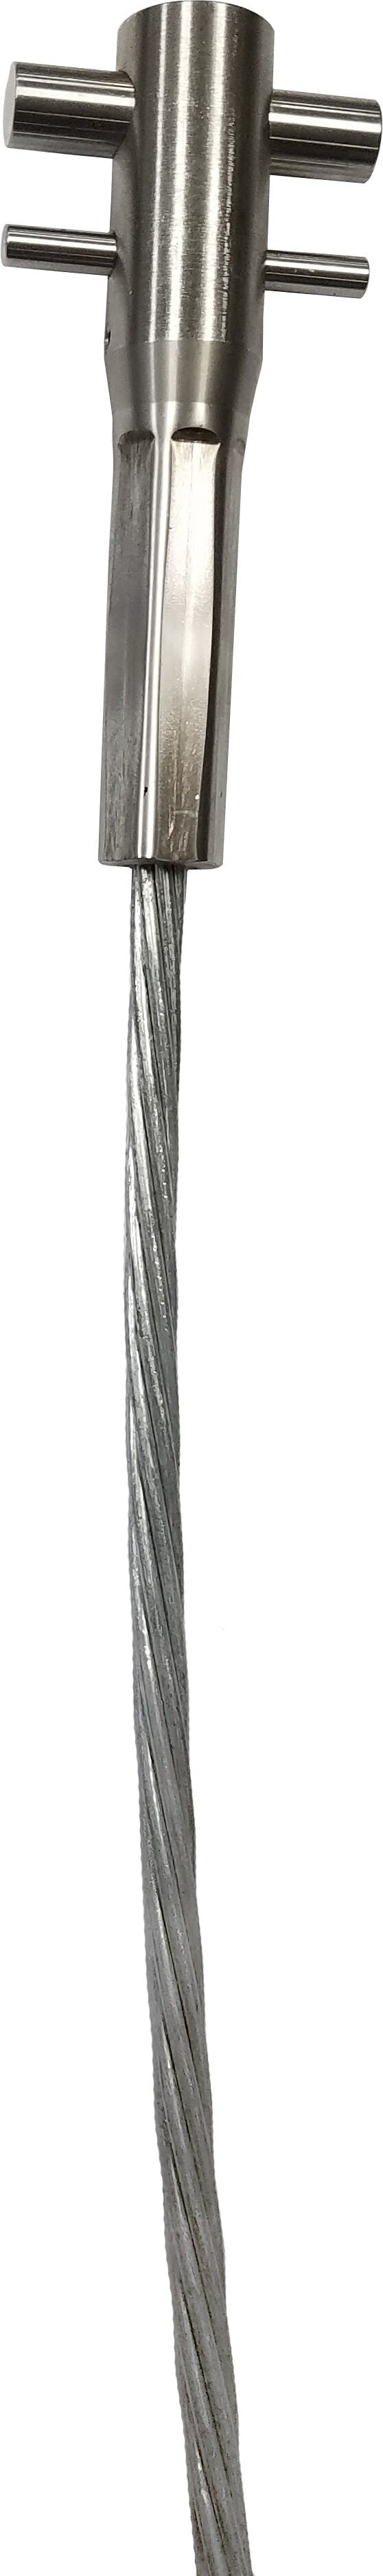 3M™ DBI-SALA® Lad-Saf™ Swaged Cable 6115028, 3/8 Inch, Galvanized Steel, 120 m_0